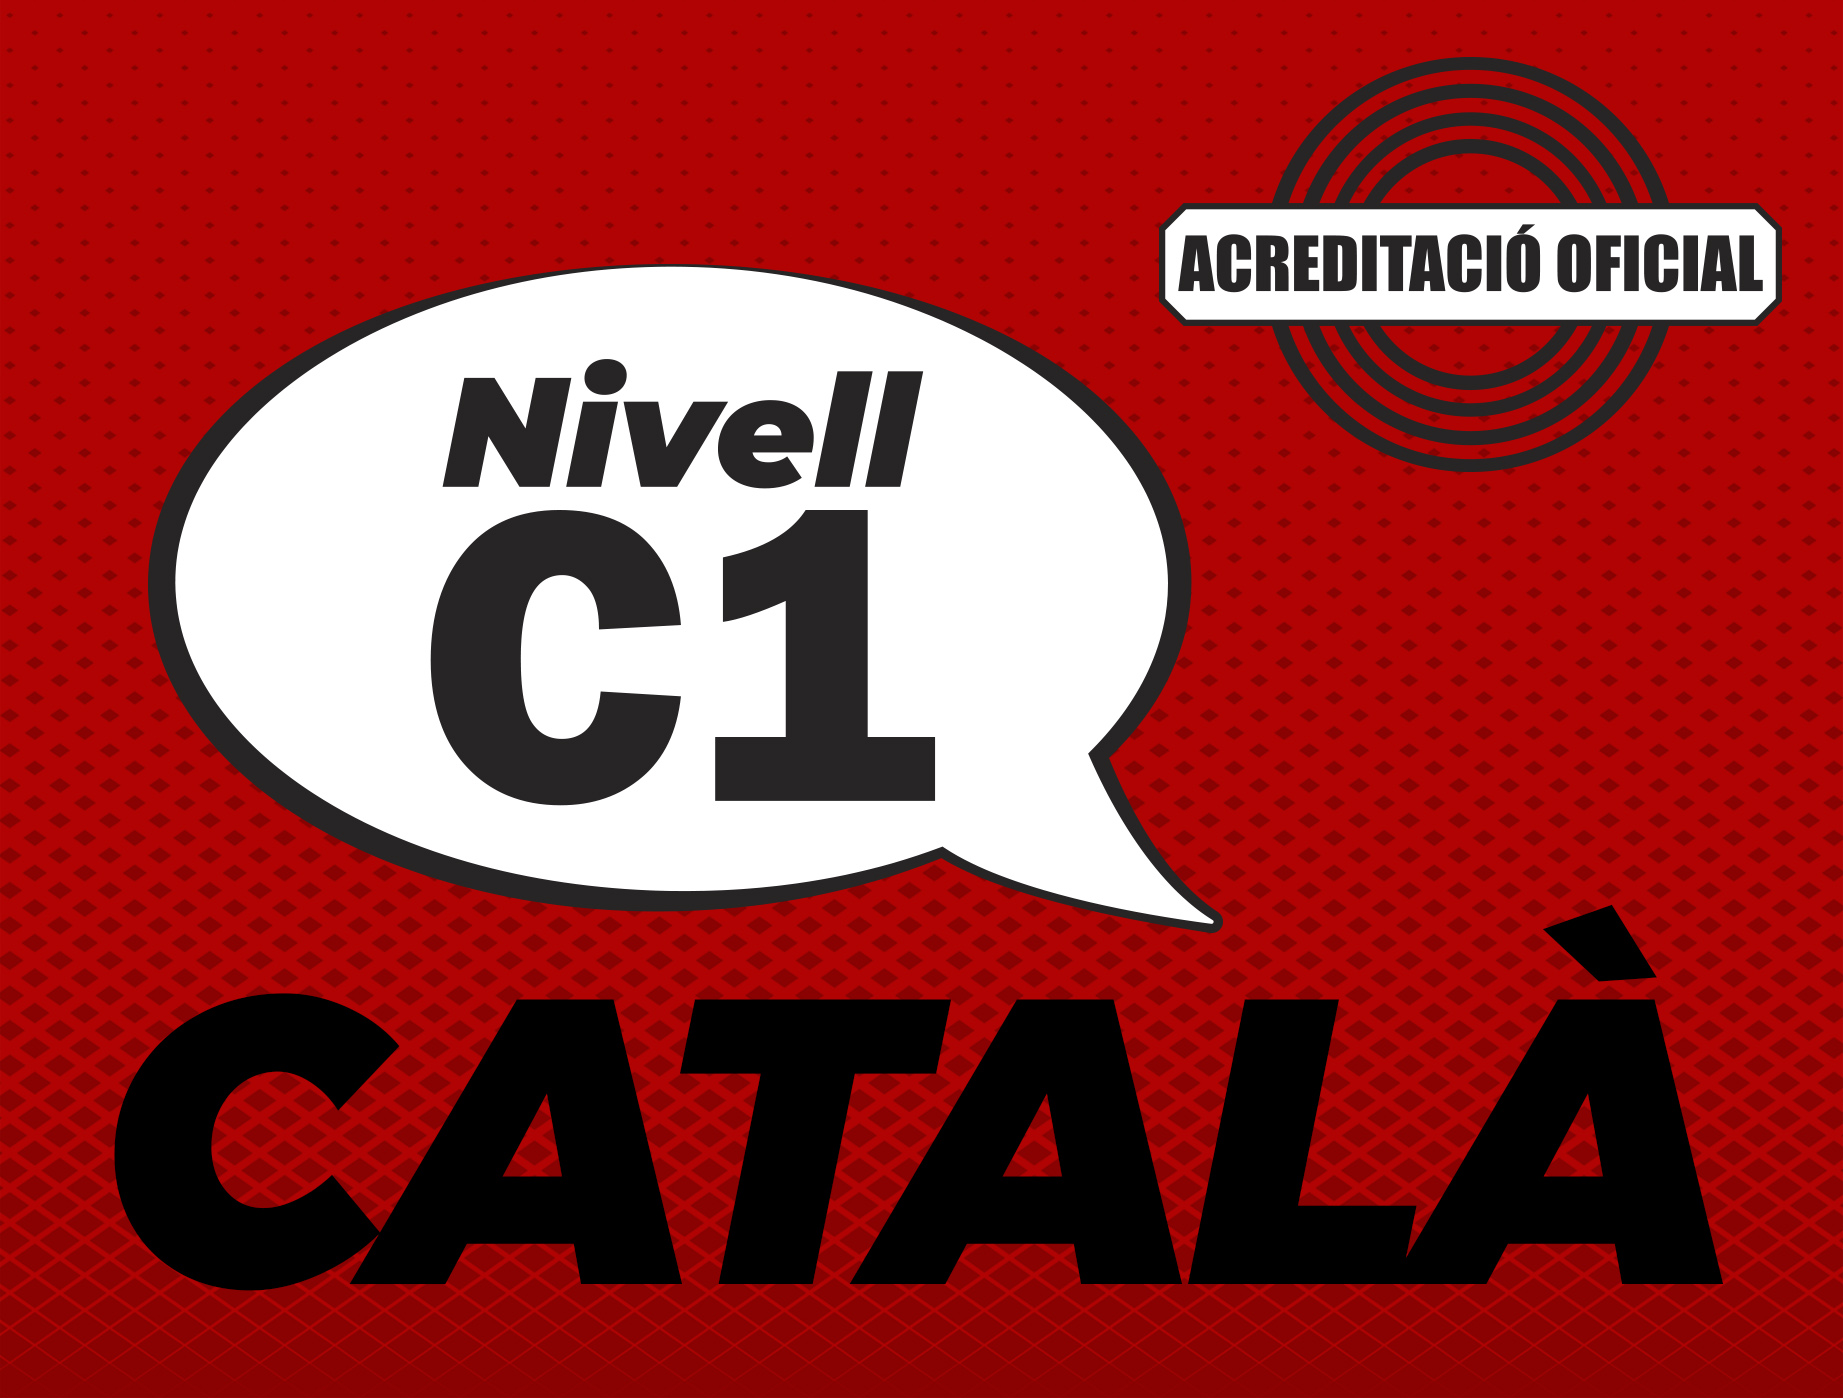 Català C1